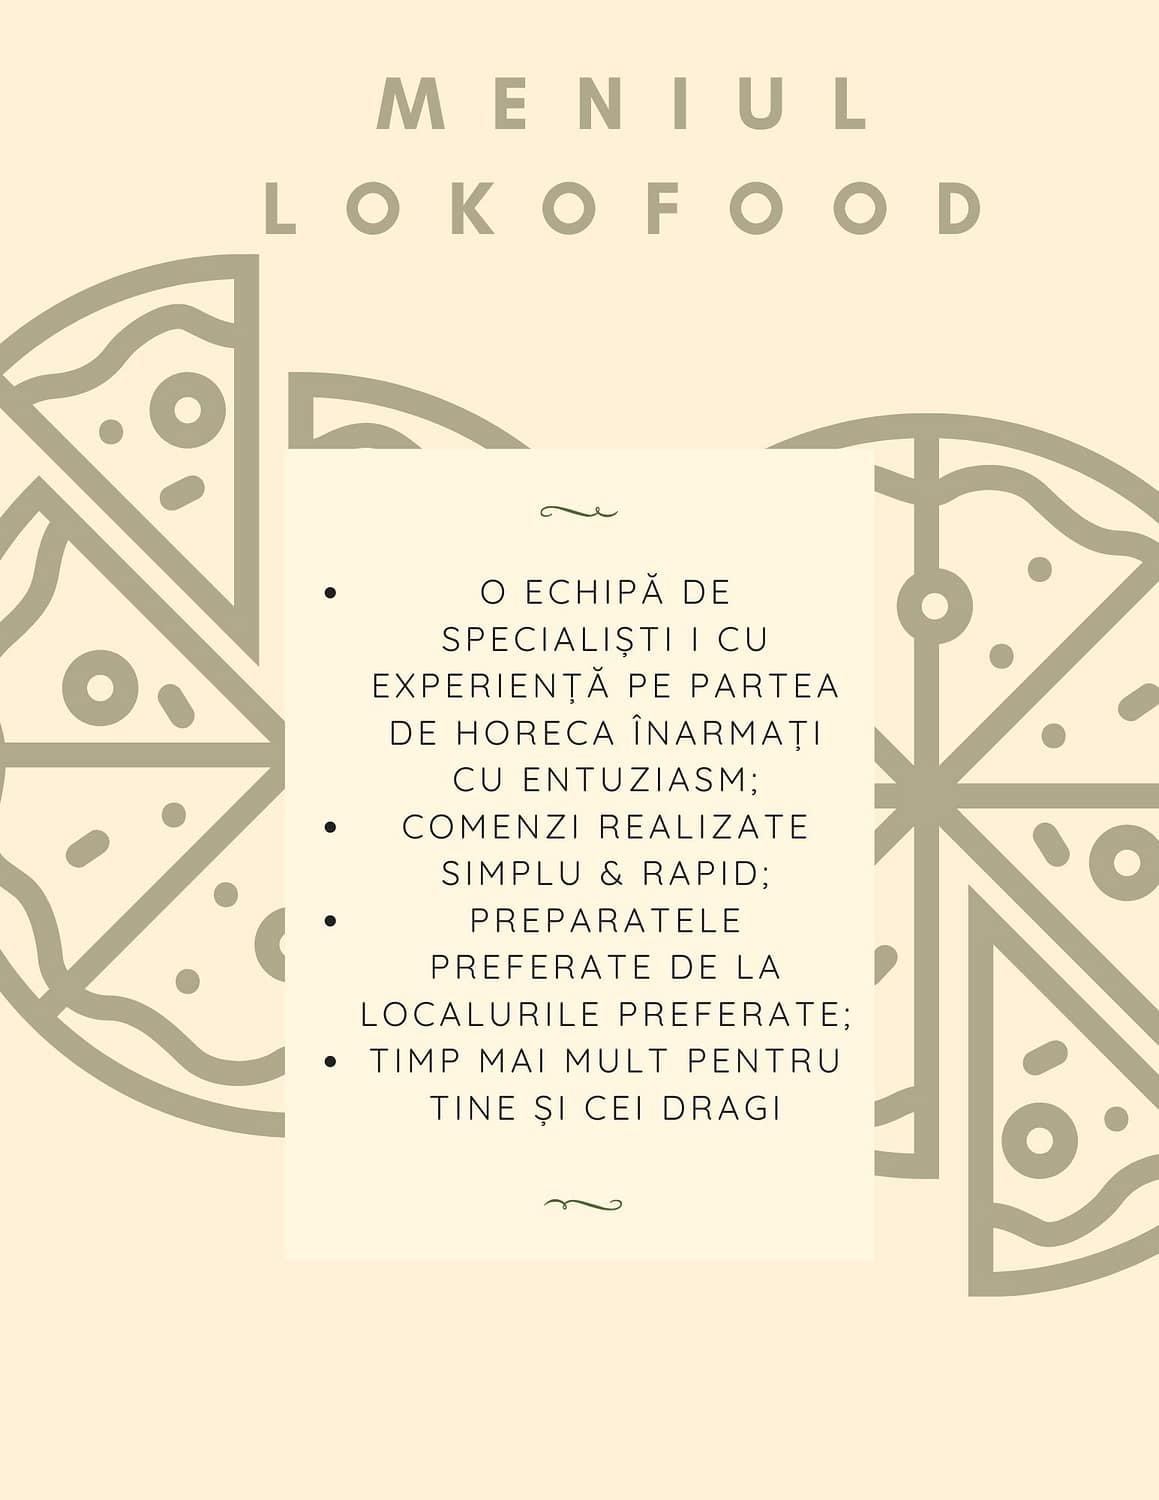 lokofood